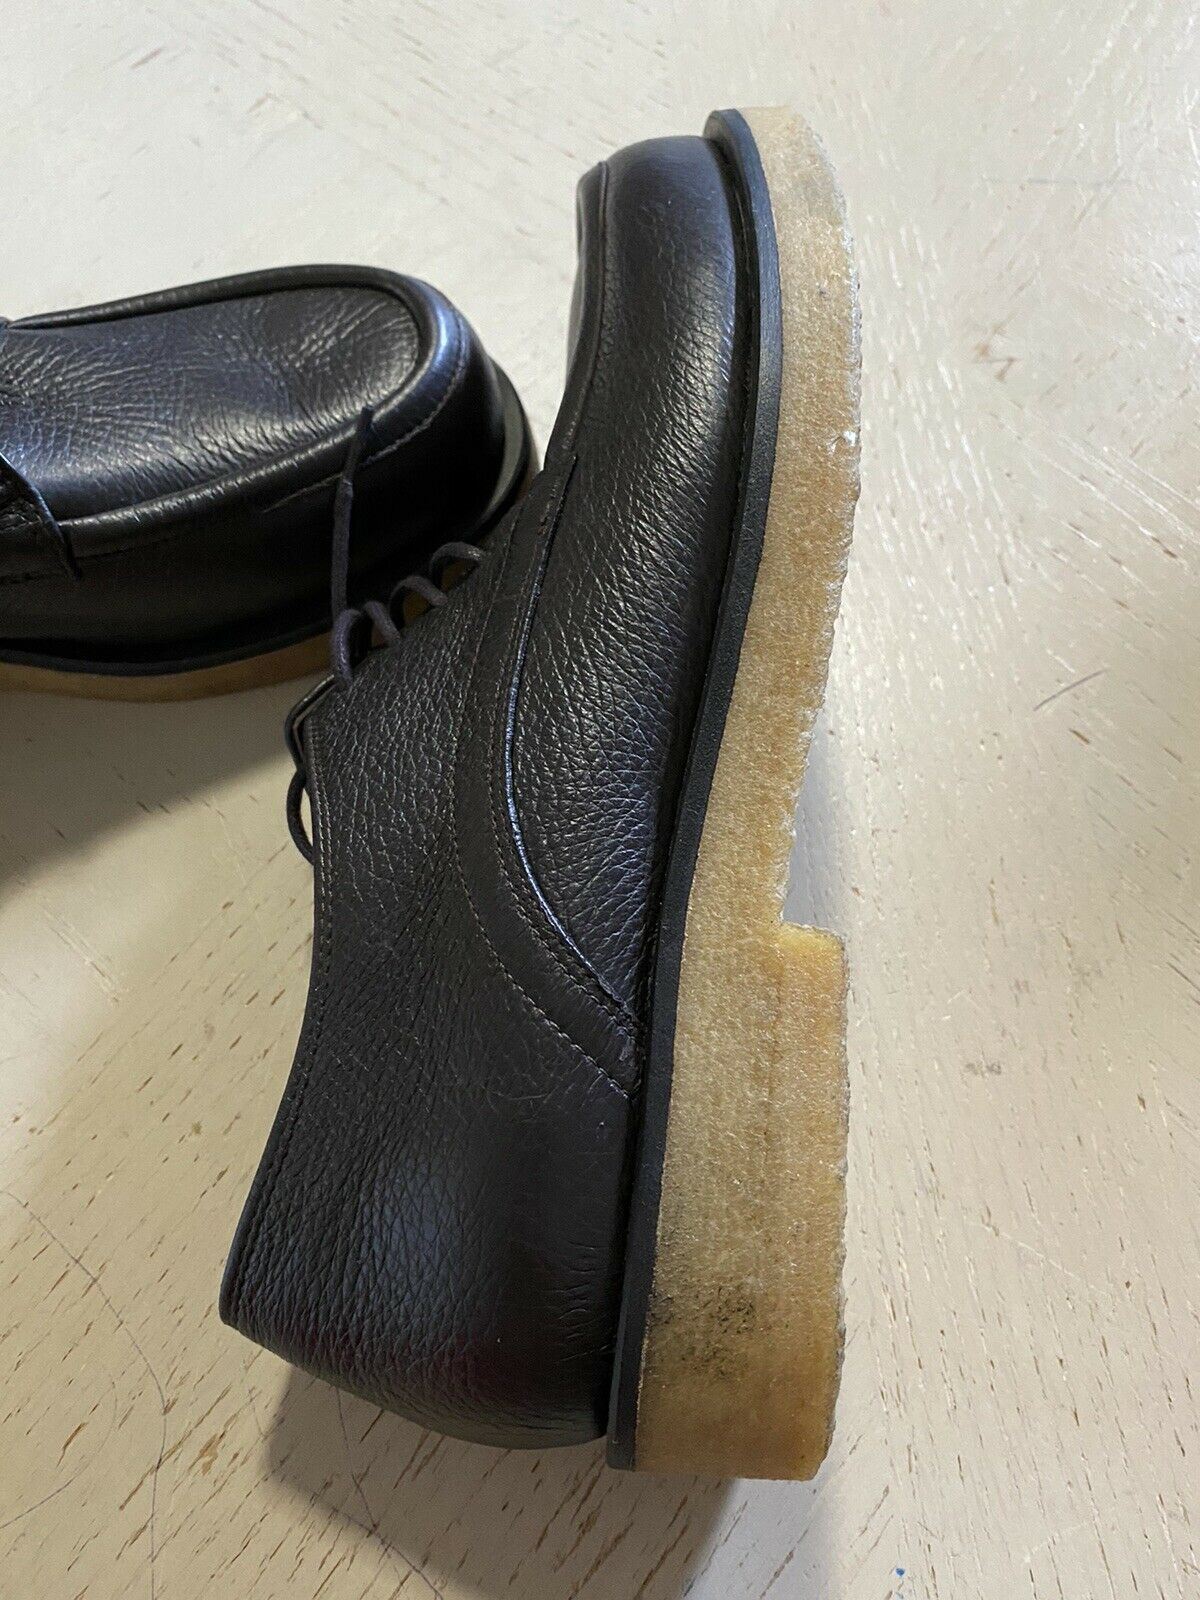 NEU $ 1190 THE ROW Damen-Loafer aus weichem Leder, DK Braun, 7 US/37 Eu, Italien